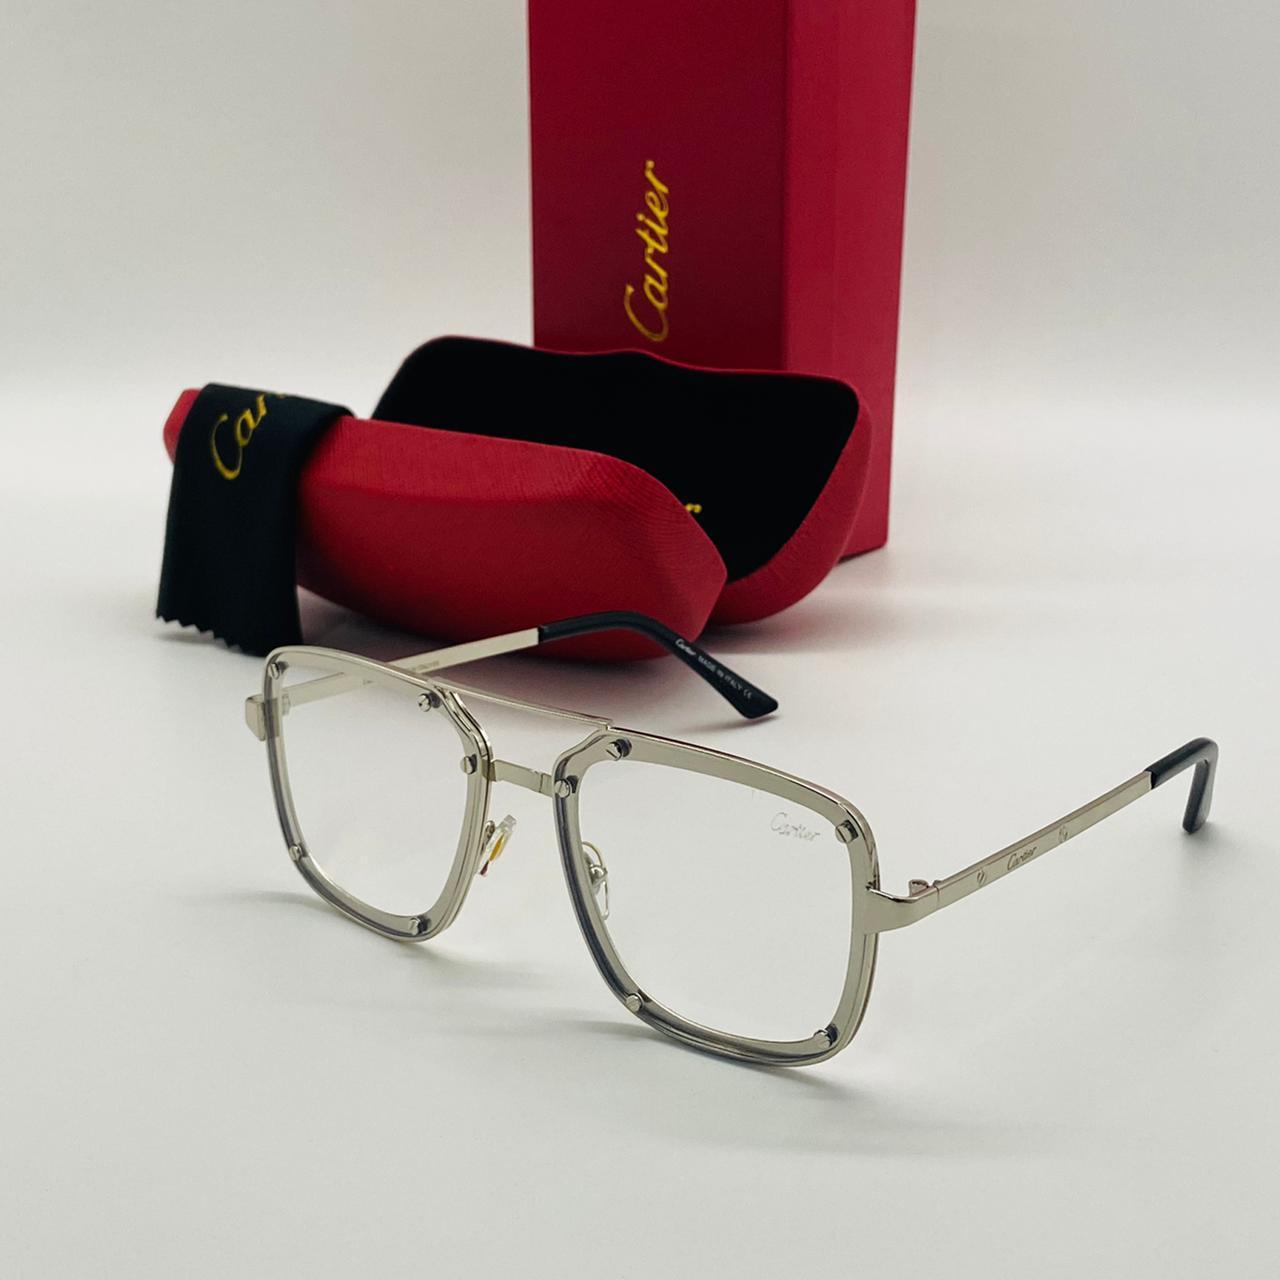 Cartier Transparent Glass Square Sunglasses For Man CRTR-100 Silver Fram and Silver Stick Gift Sunglass